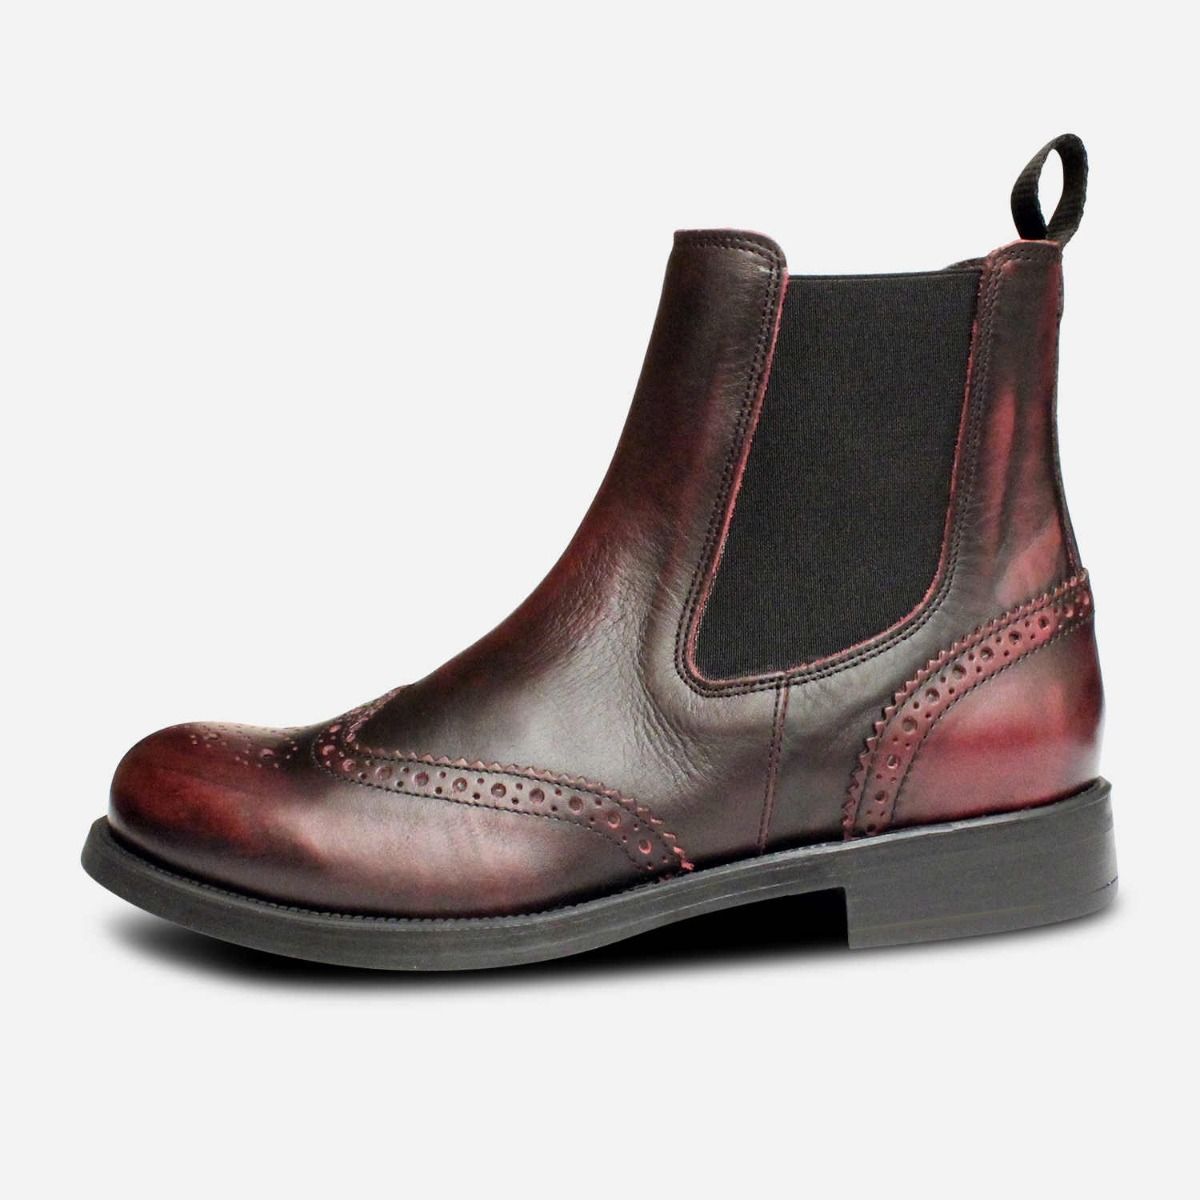 burgundy chelsea boots